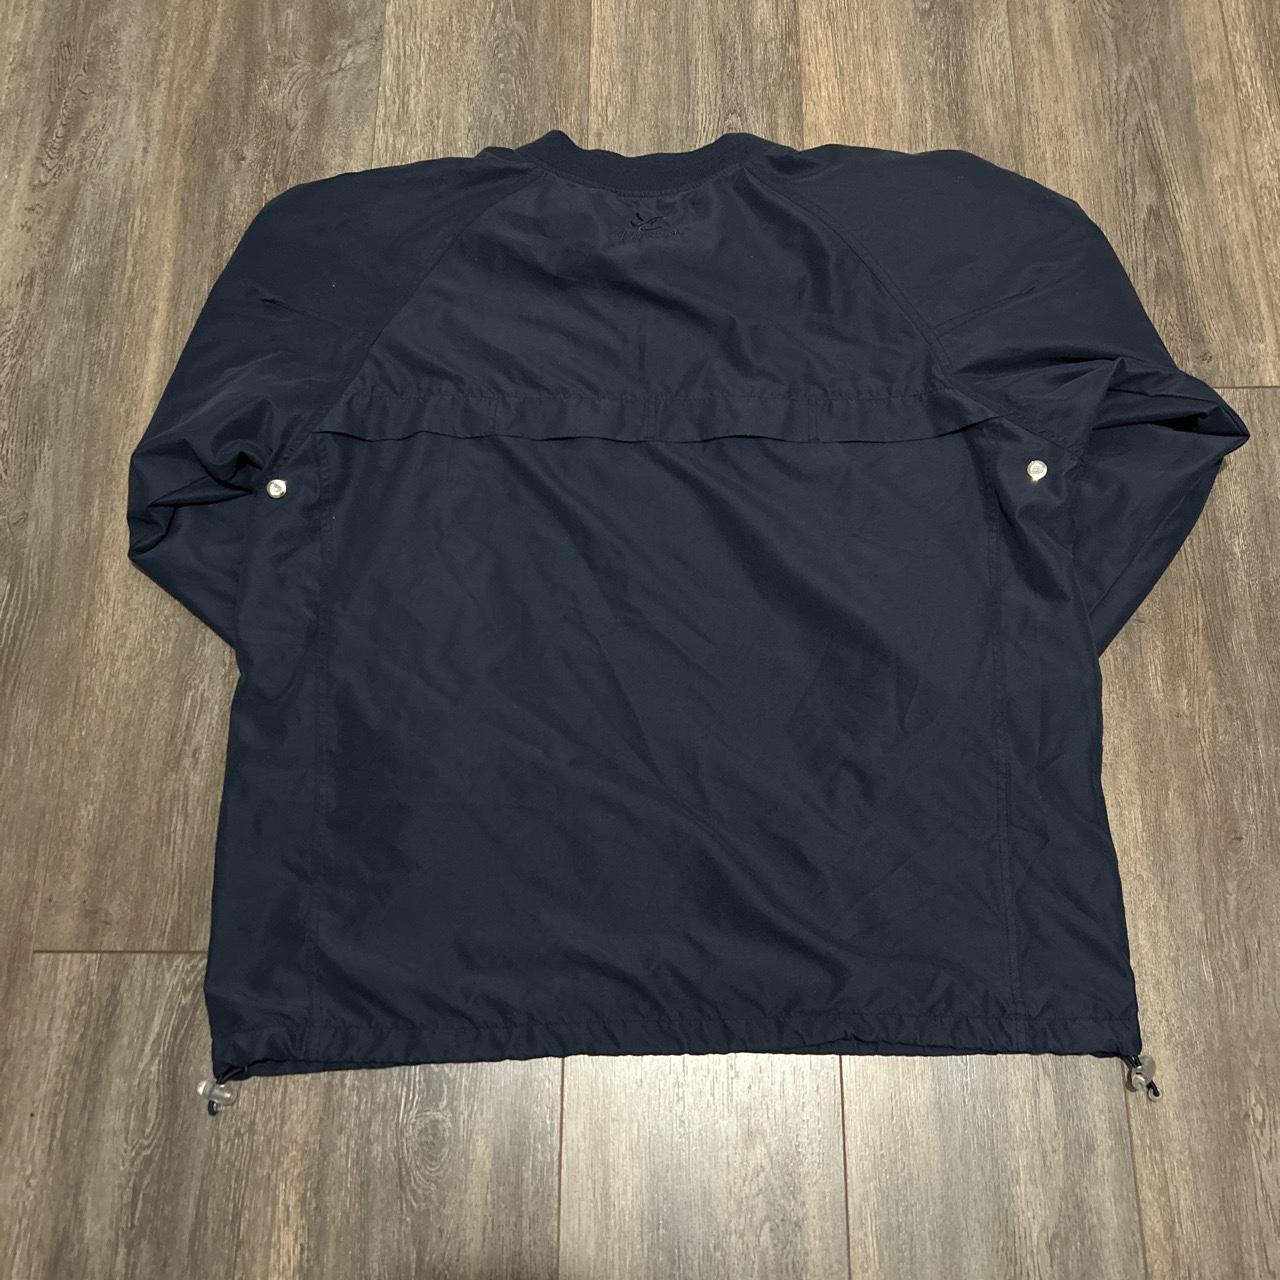 Chase Authentics Men's Navy Sweatshirt (3)